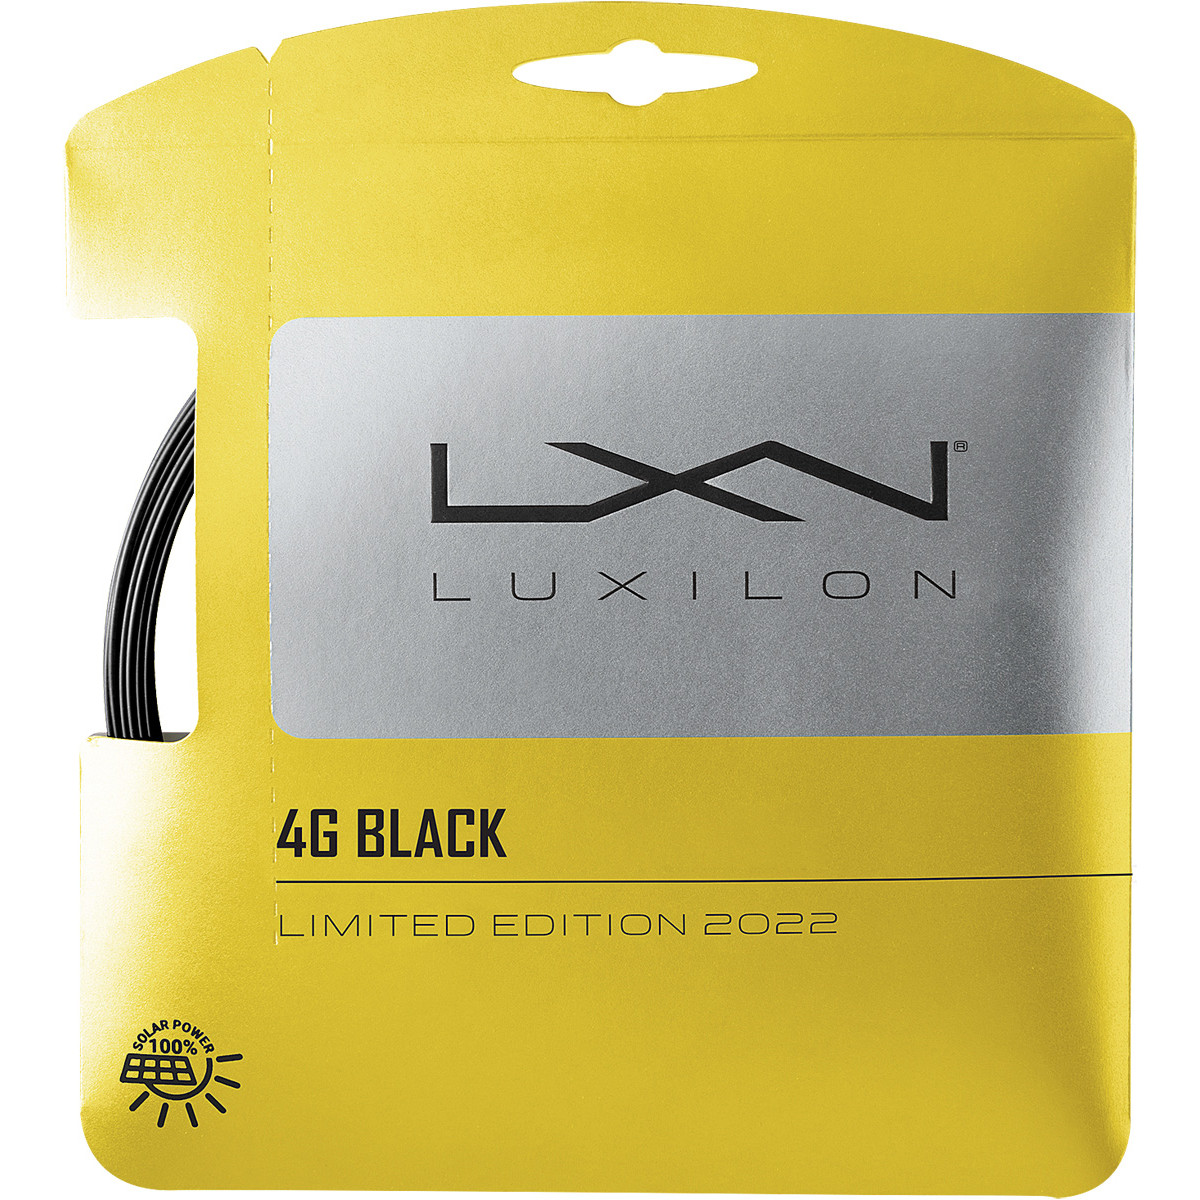 CORDAGE LUXILON 4G BLACK (12 METRES)